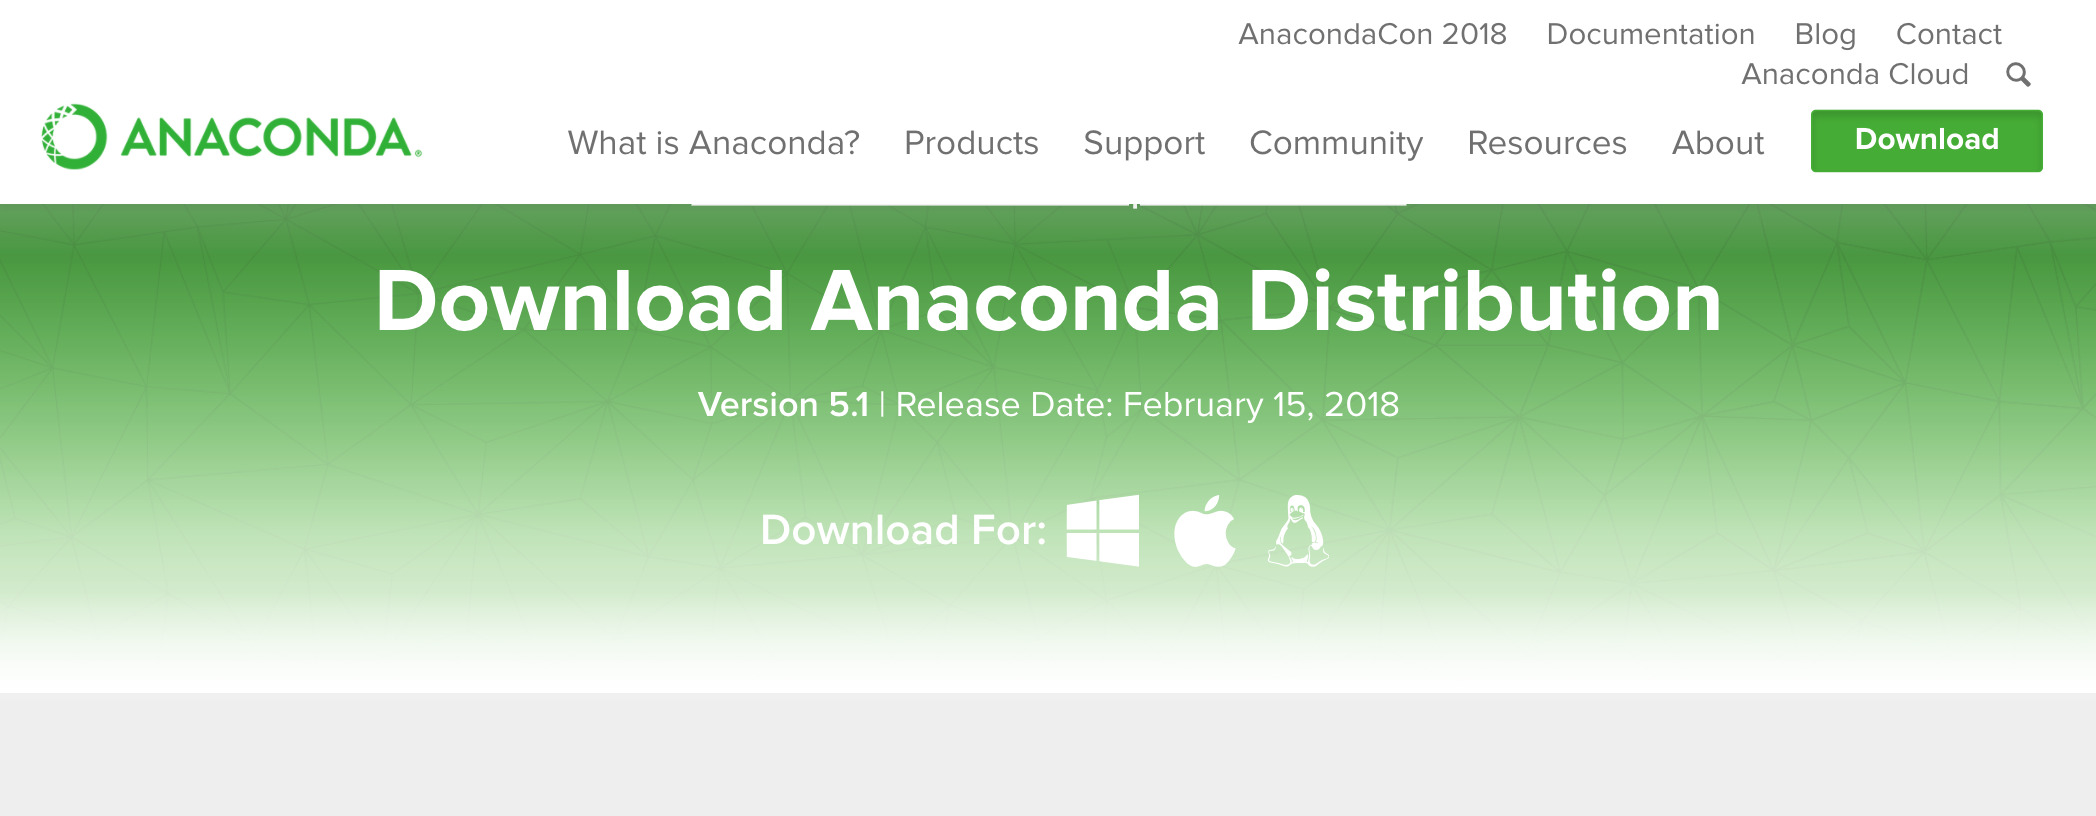 https://www.anaconda.com